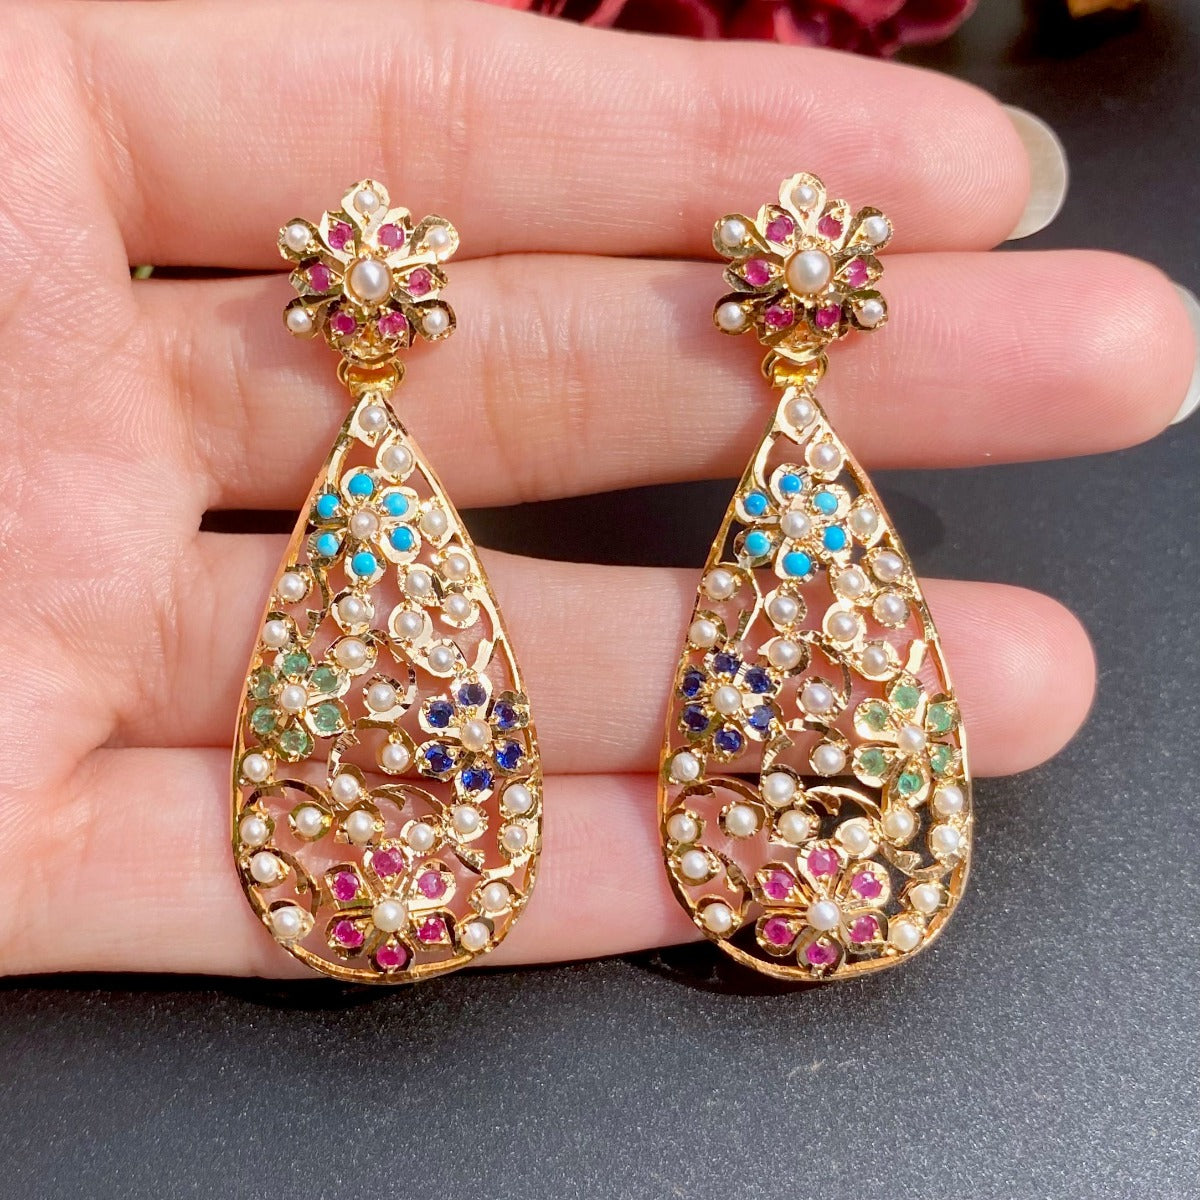 22k gold earrings studded with navratna stones